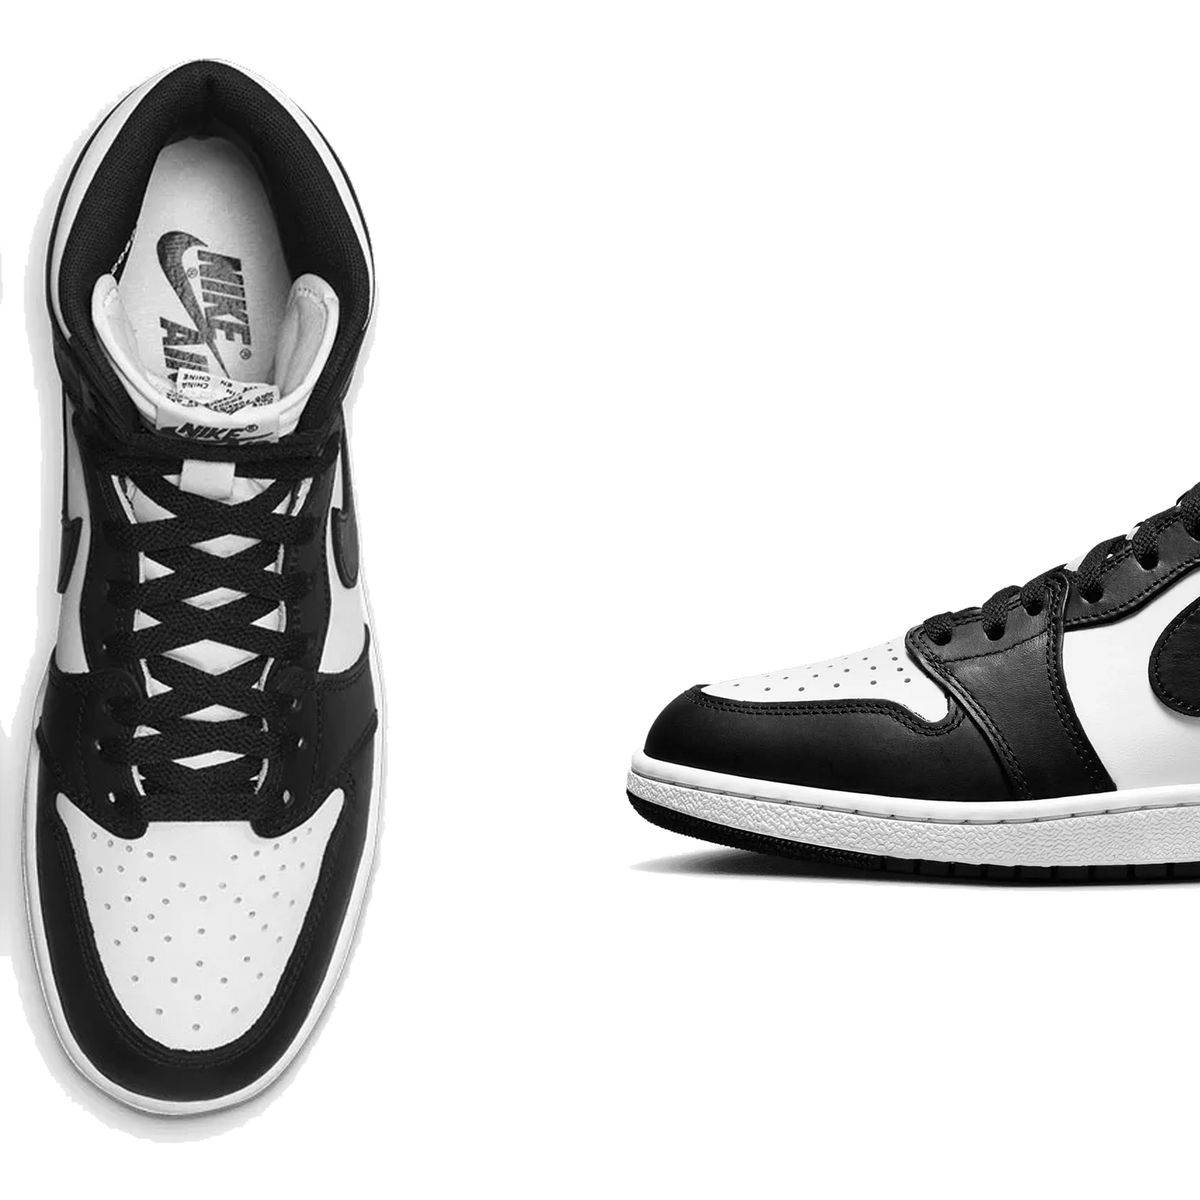 Real vs. Fake - White Supreme x Air Jordan 5 Comparison